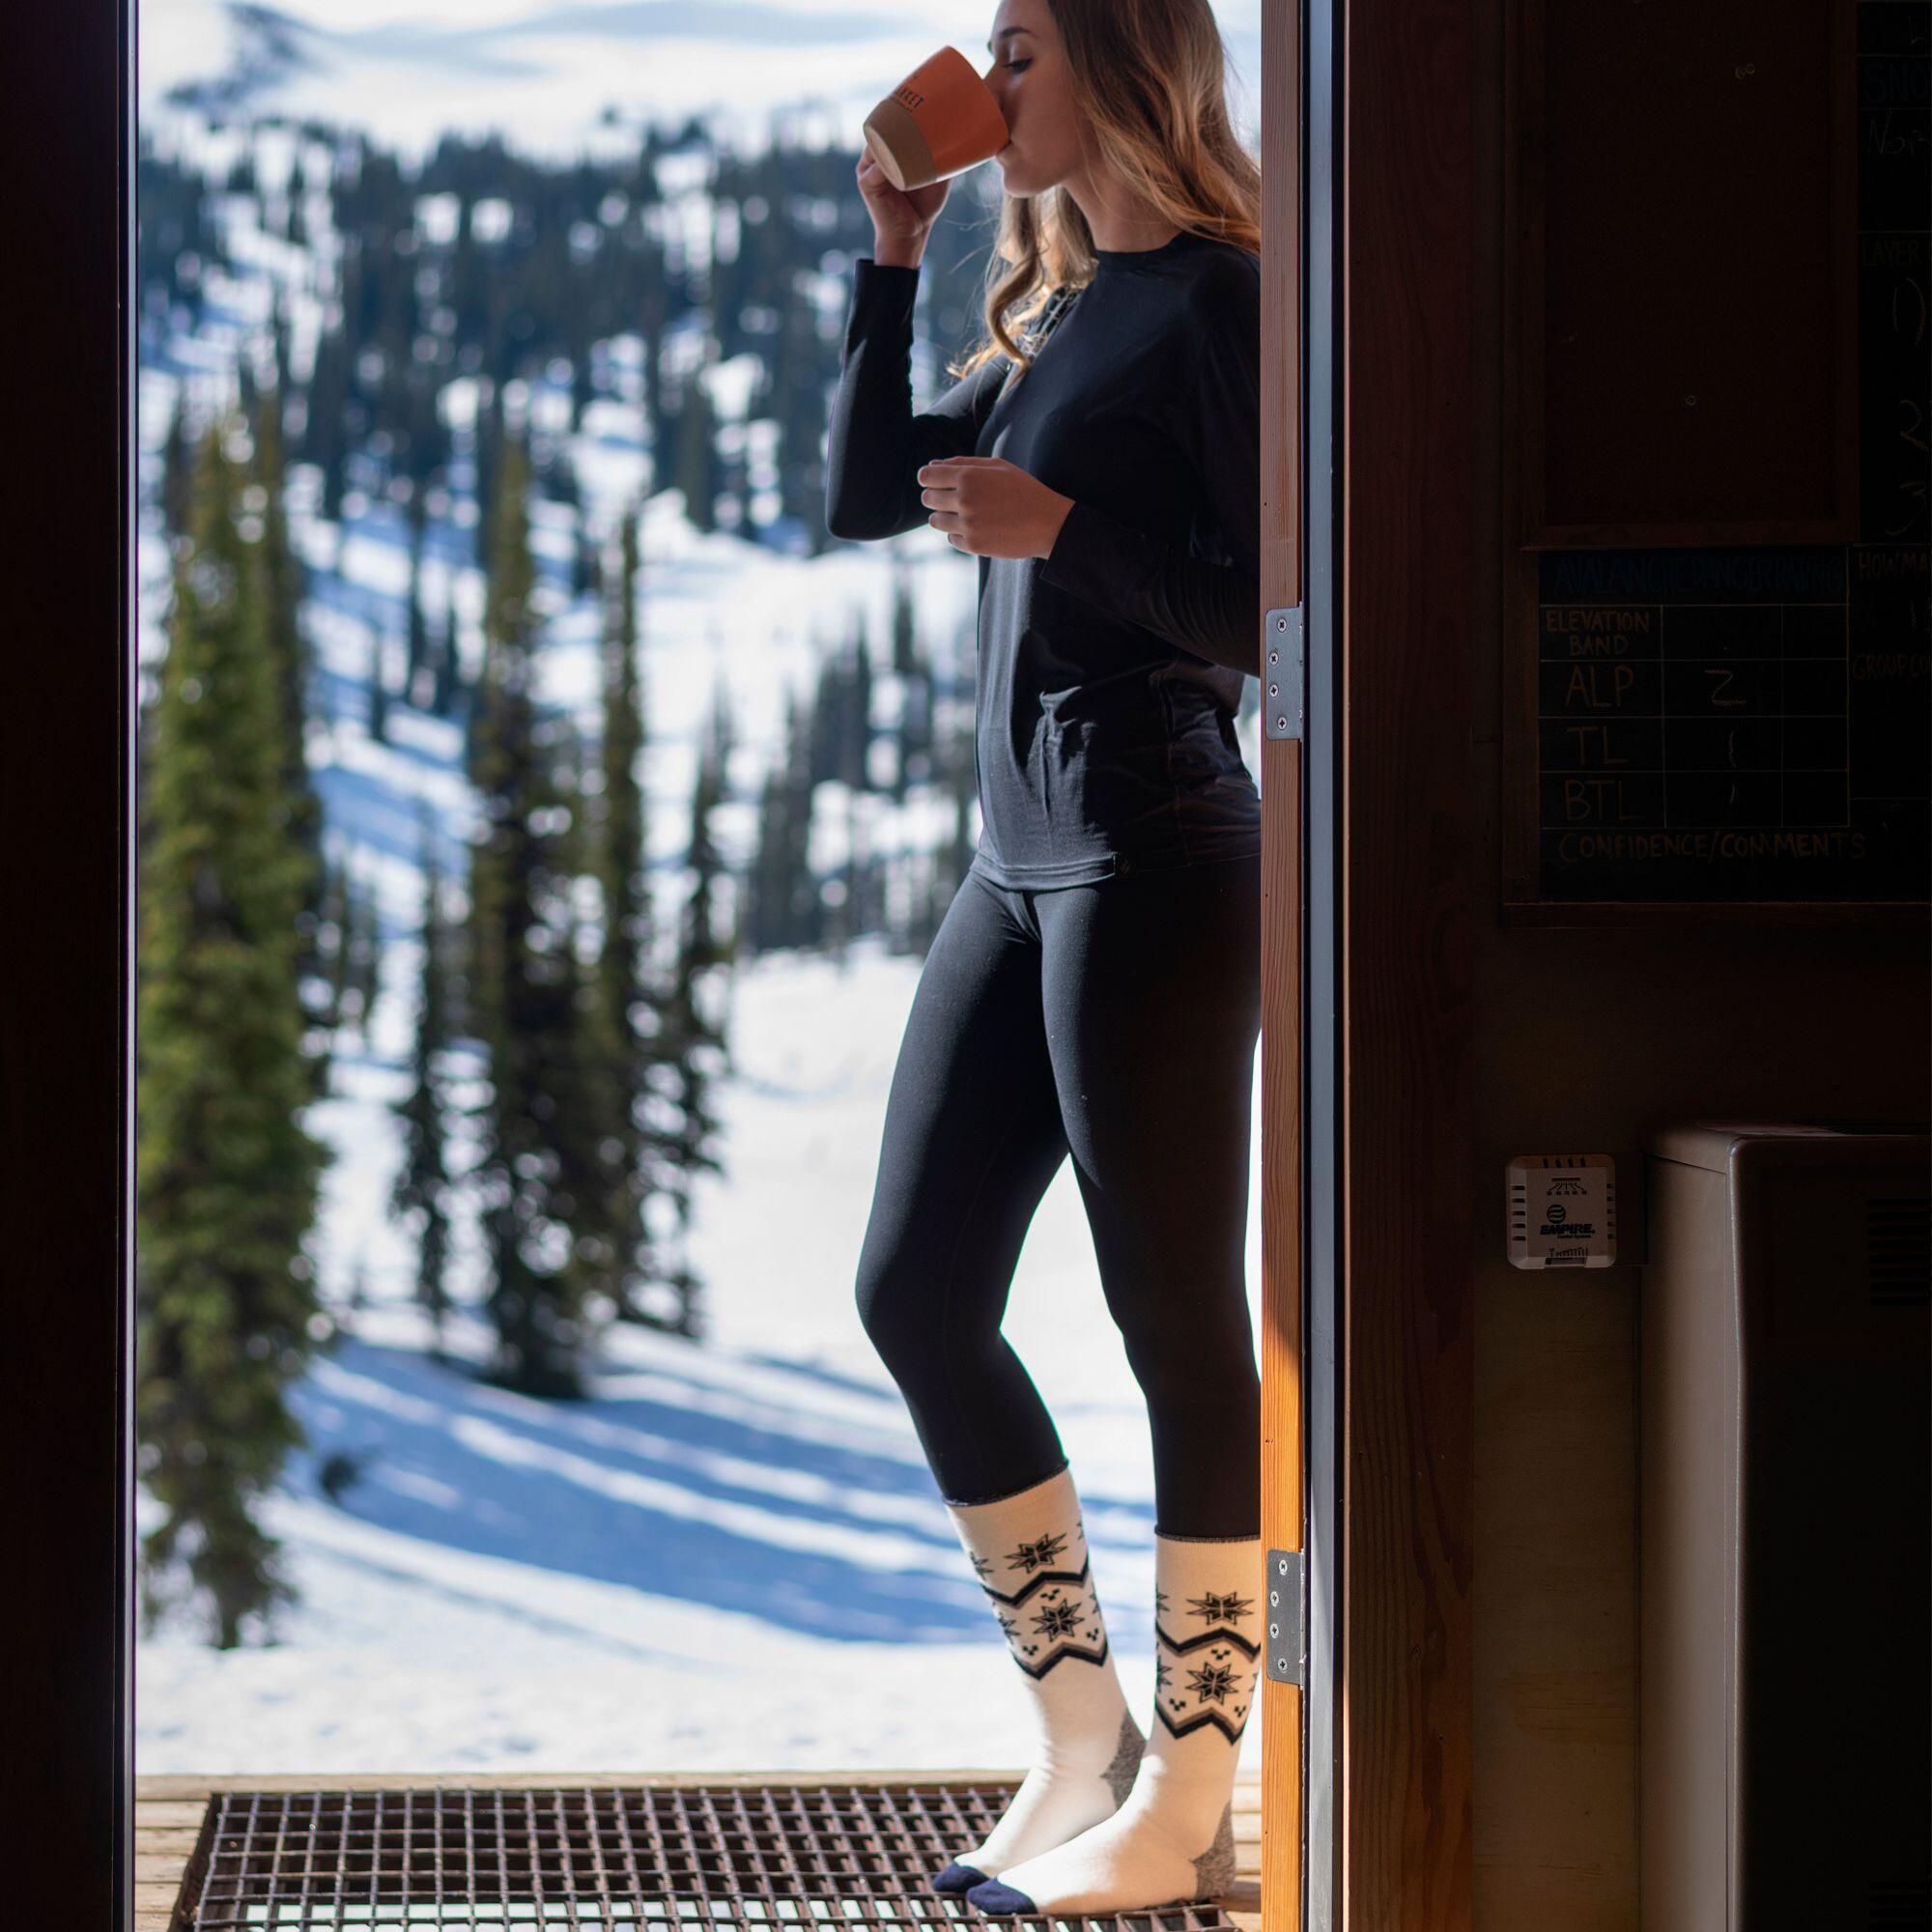 Ladies Thin Lightweight Warm Thermal Winter Long Knee High Ski Socks 3/4